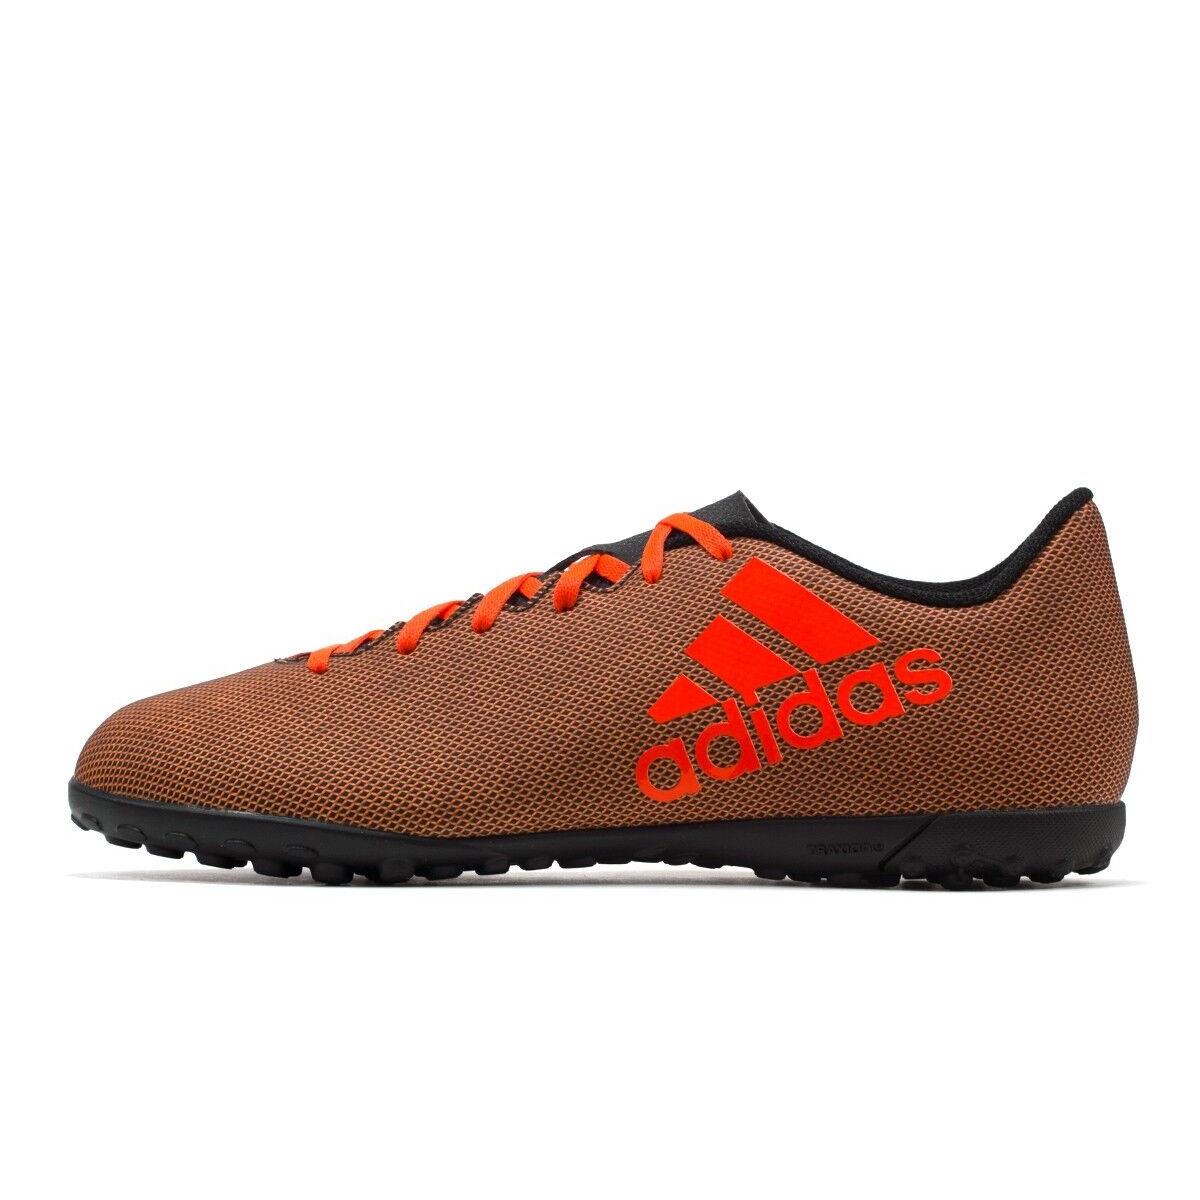 Adidas Men`s X 17.4 TF Soccer Shoes S82416 Orange/red/black Sz 8 - 13